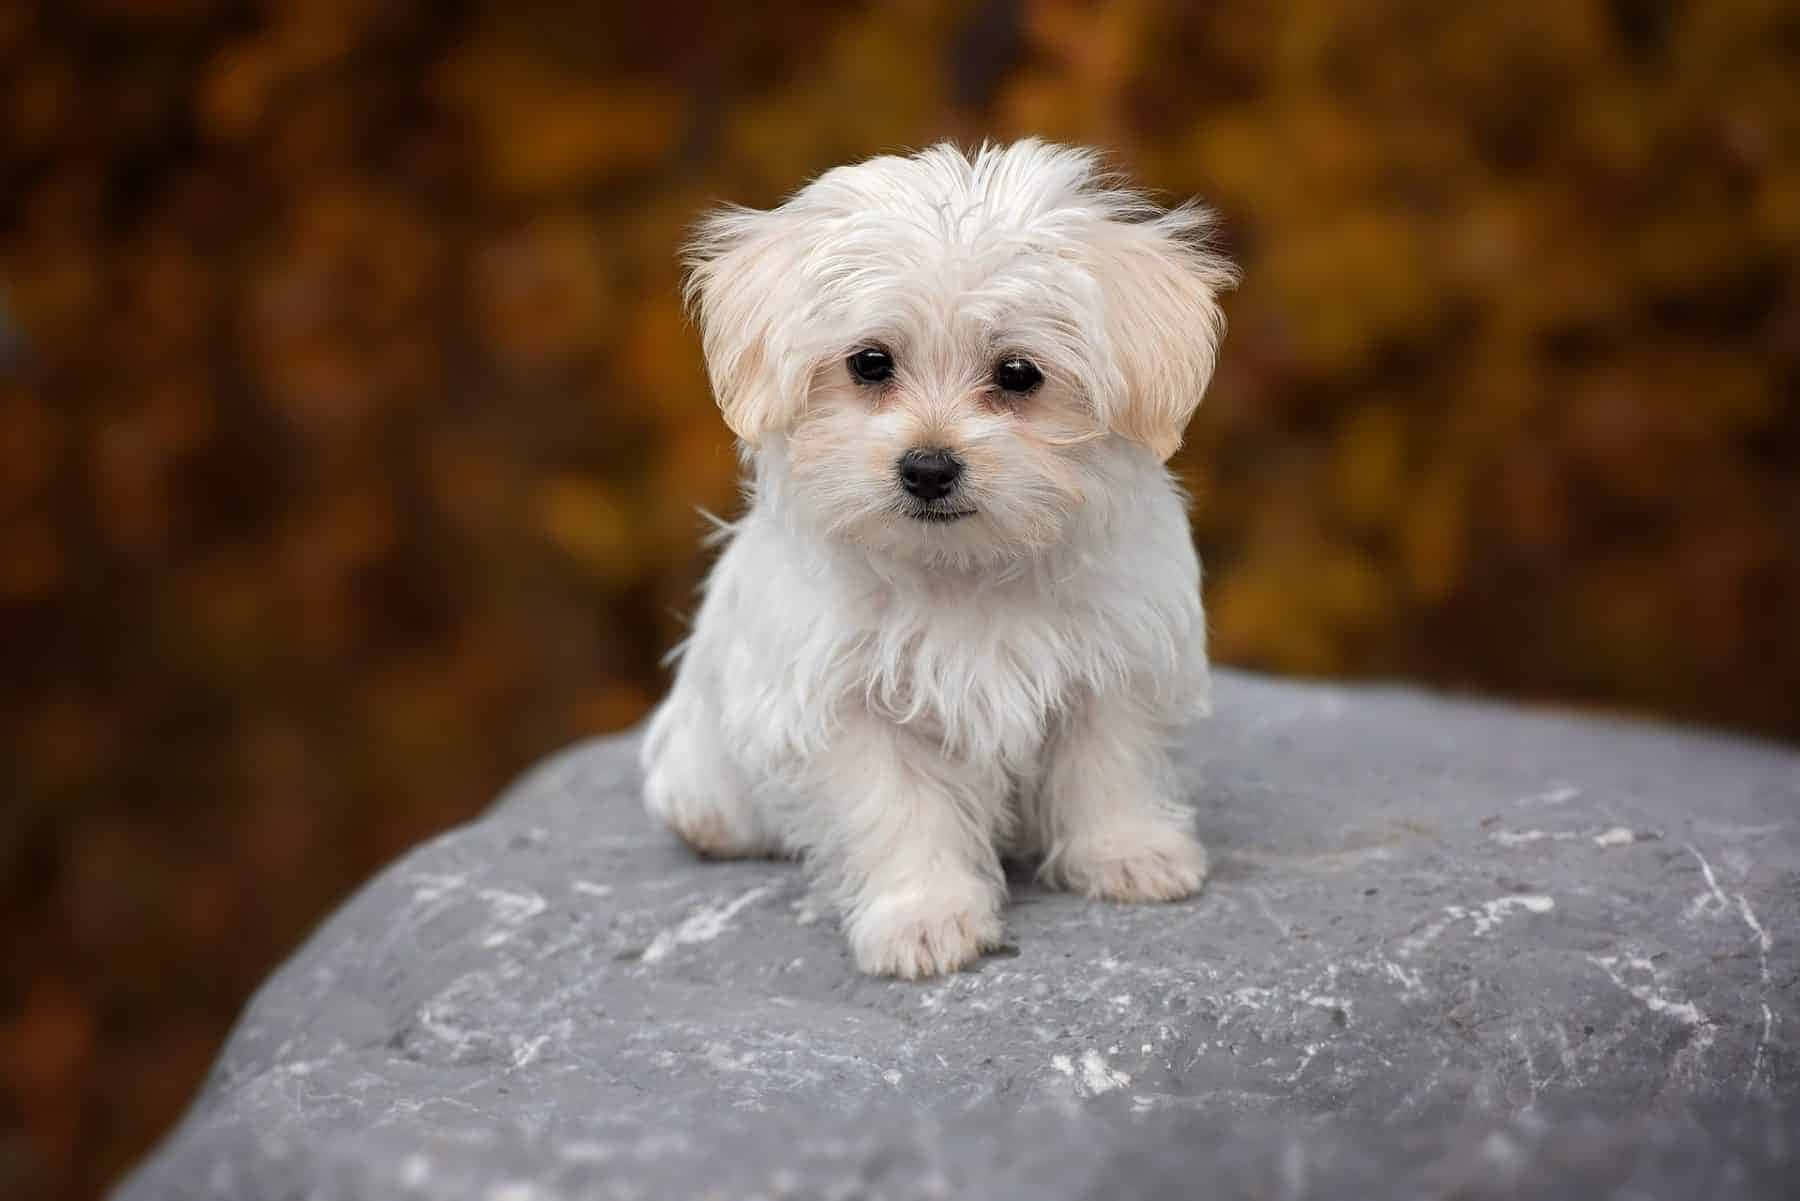 Adorable Maltese Puppy Sitting on White Fur